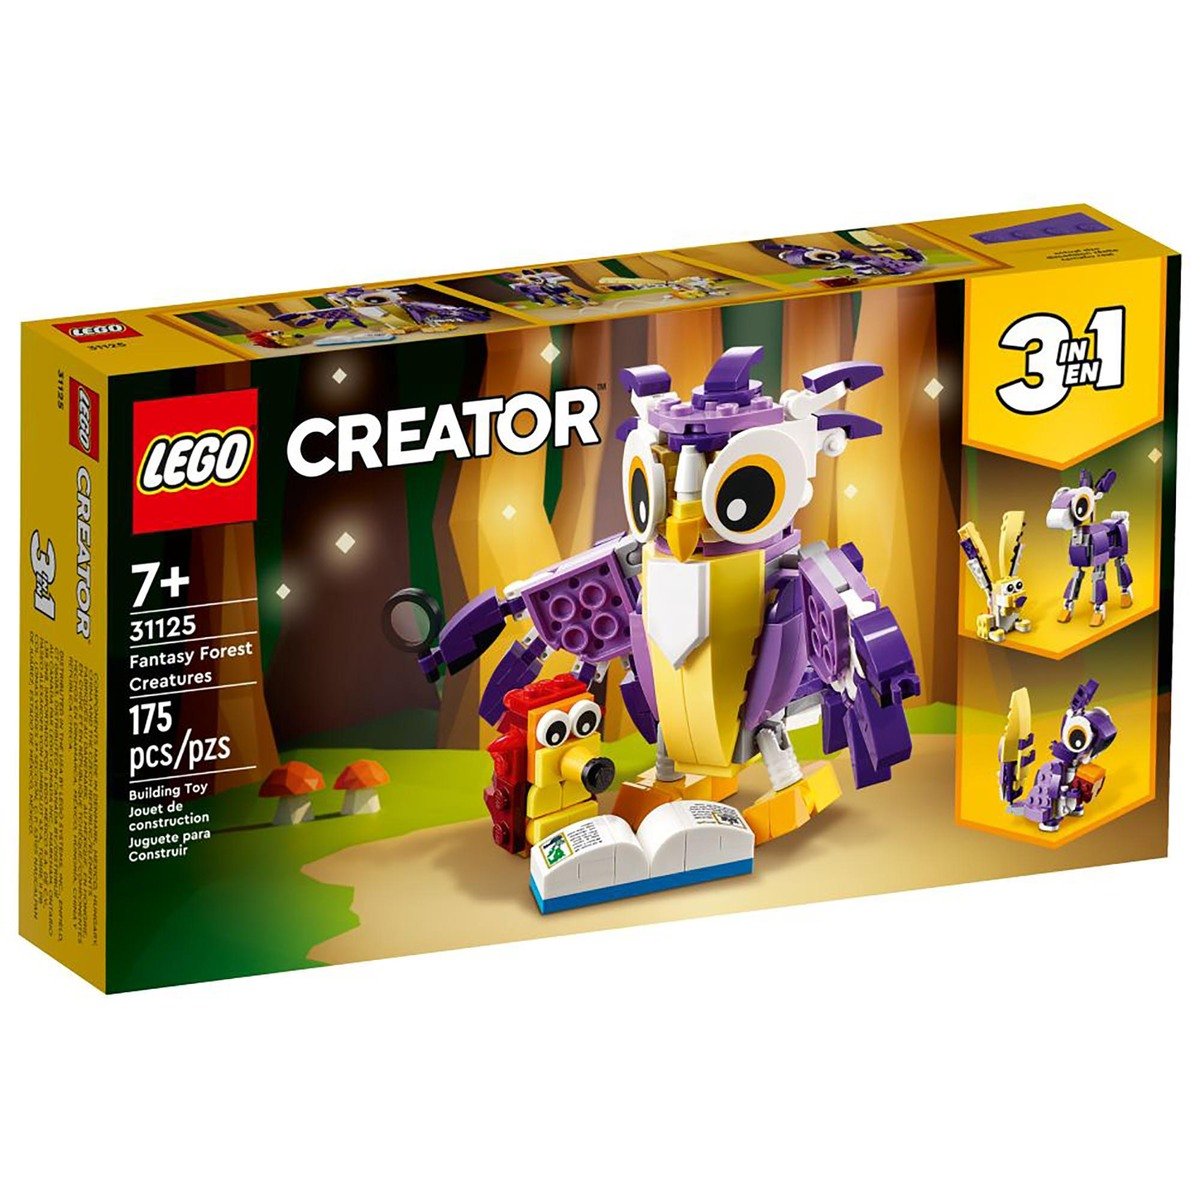 Lego 31125 Creator 3-in-1 Fantasy Forest Creatures Building Kit 175pcs